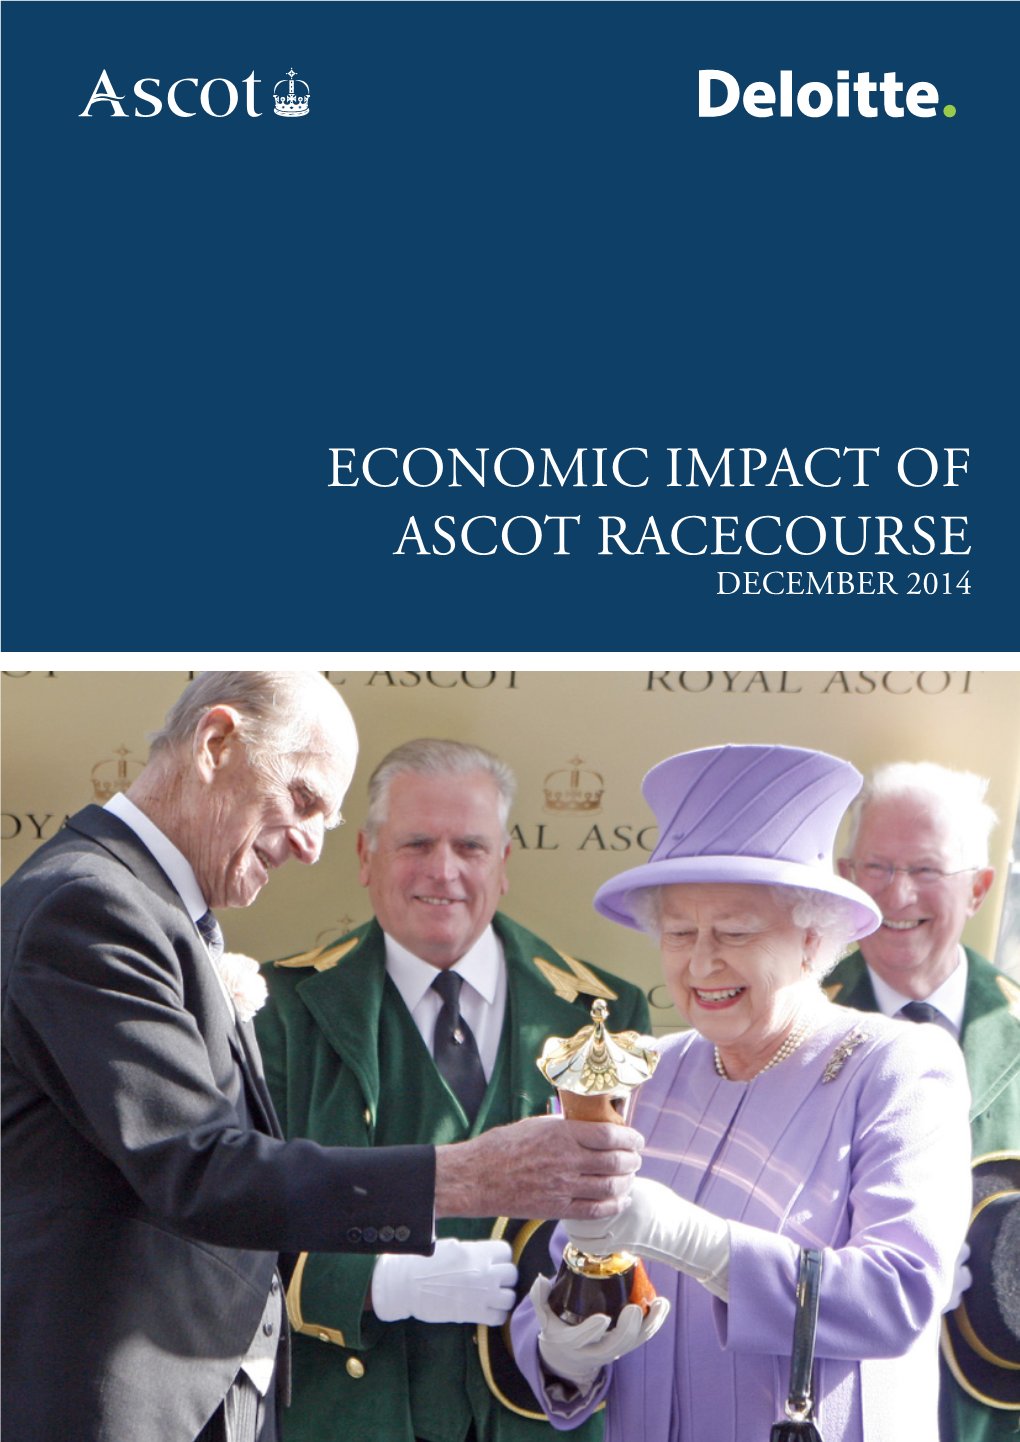 Download the Economic Impact of Ascot Racecourse